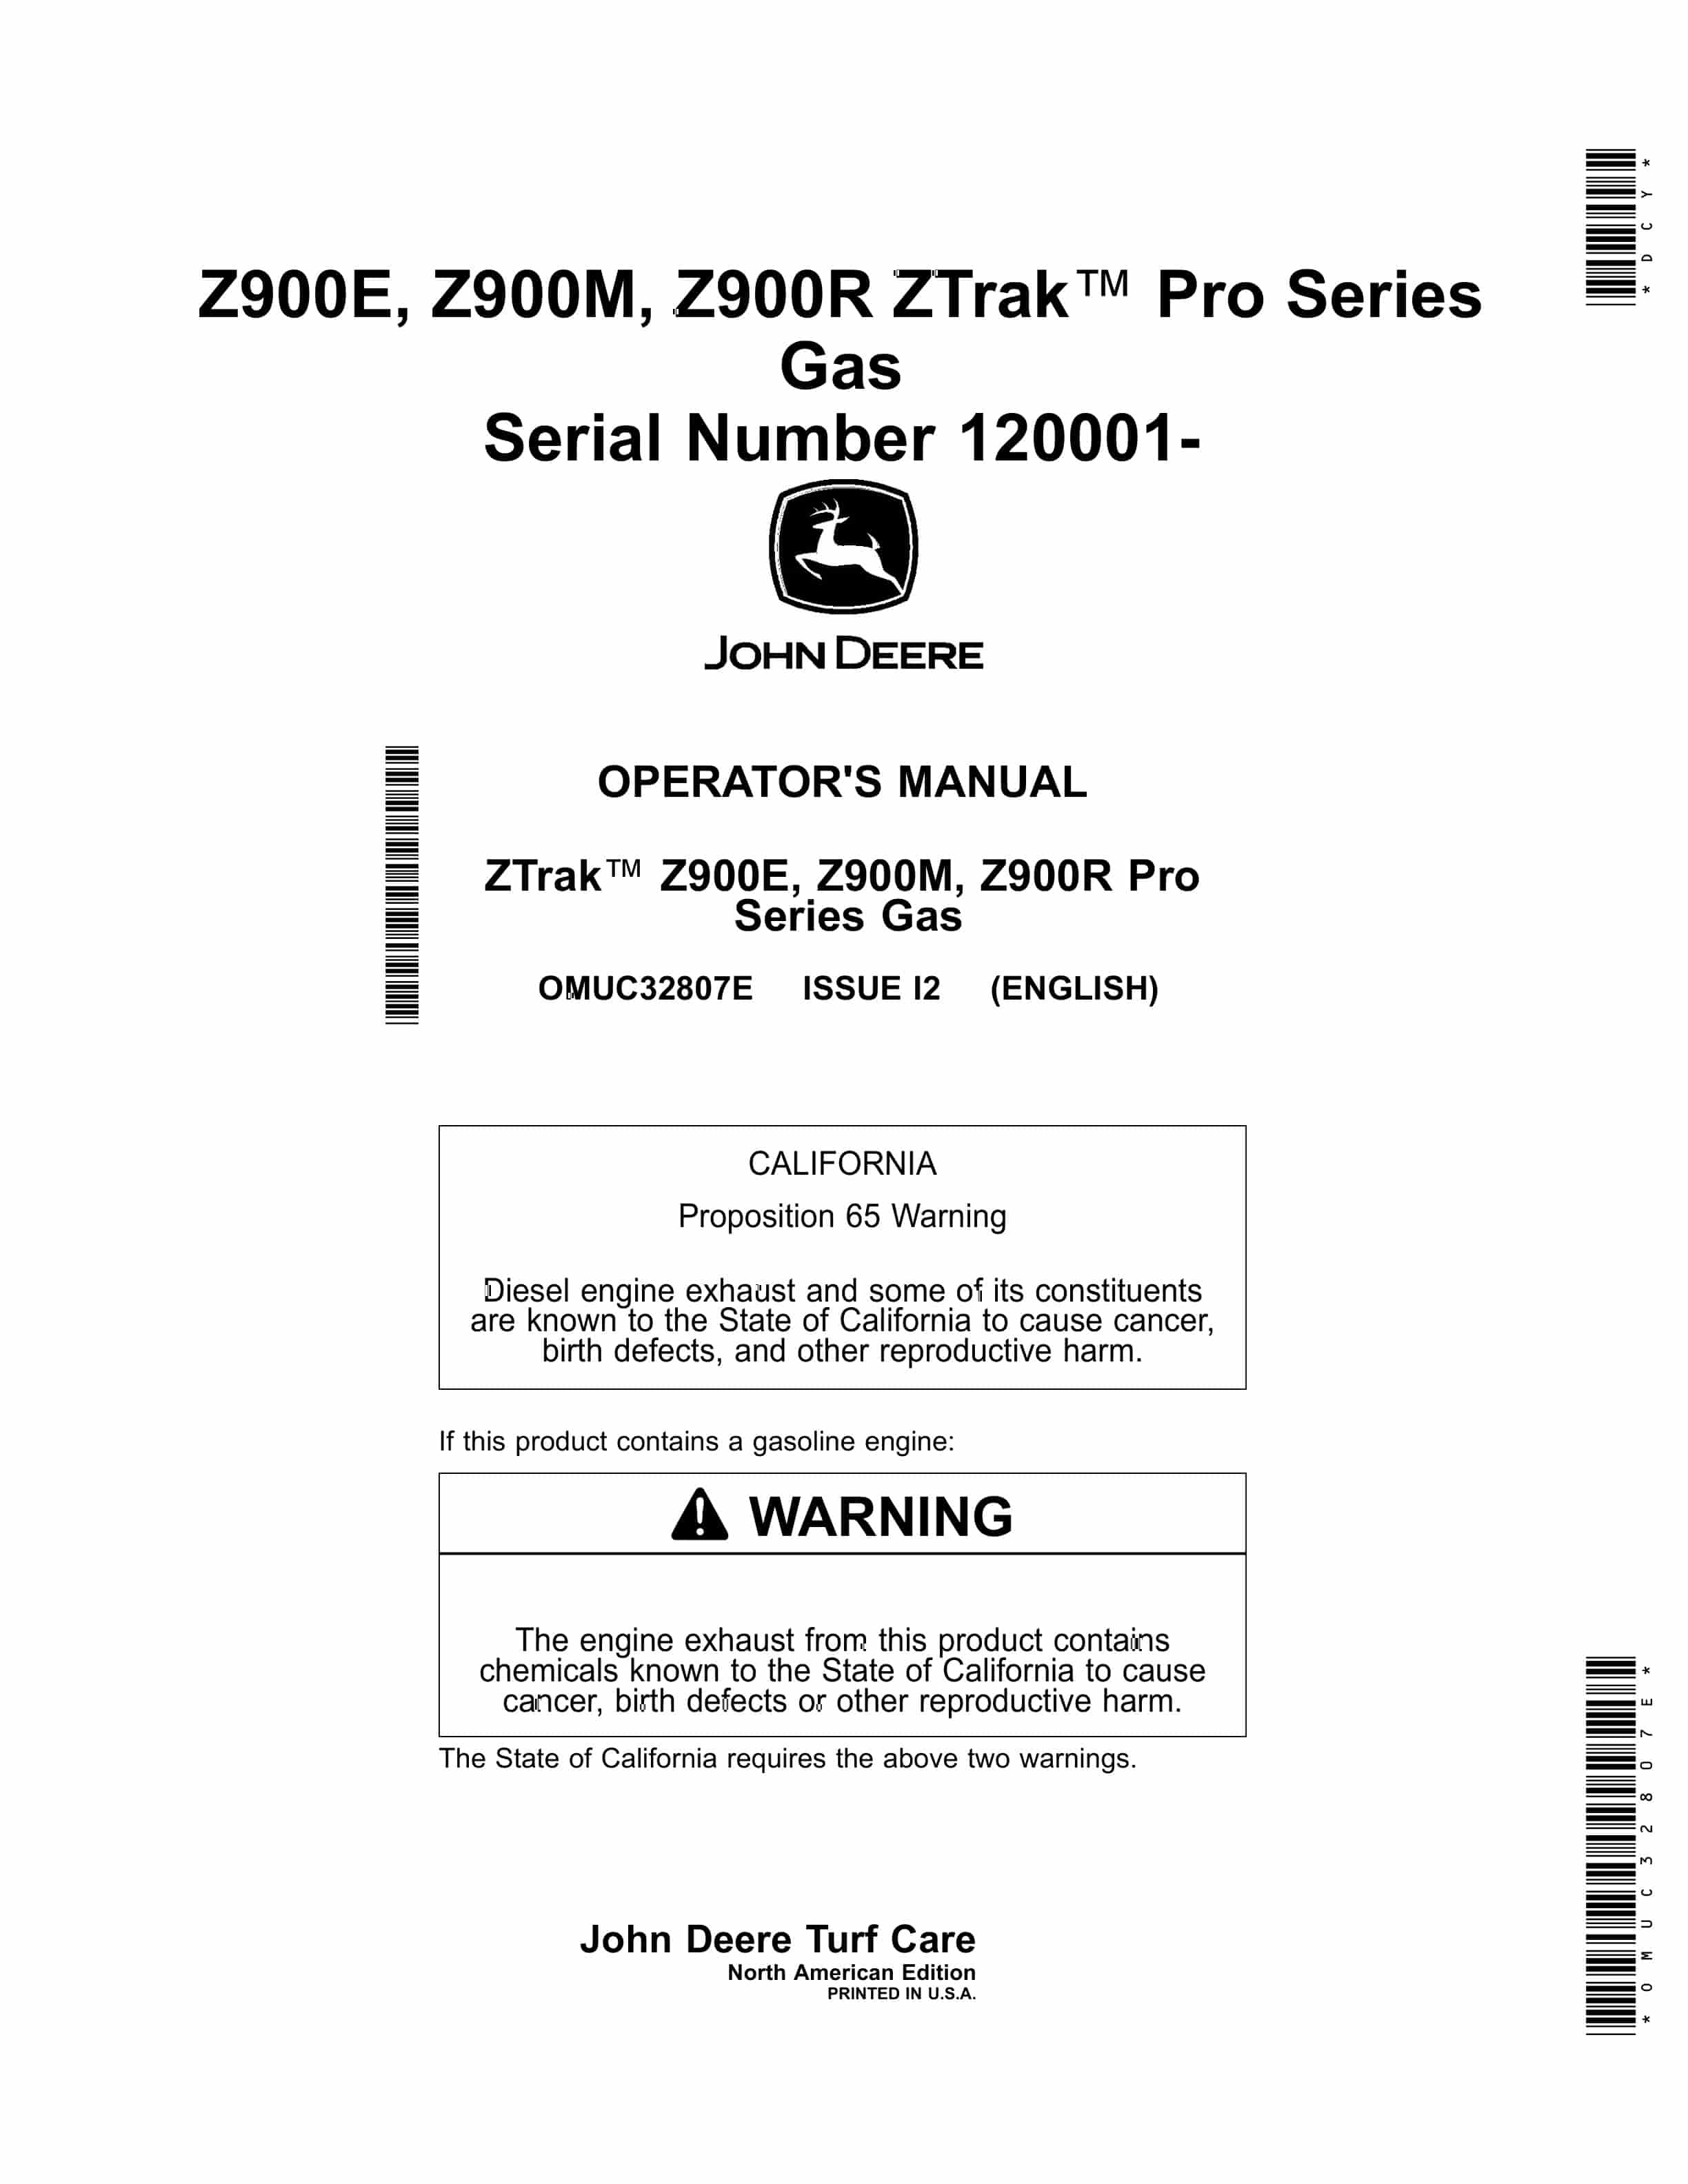 John Deere Z900E Z900M Z900R ZTrak Pro Series Gas Serial Number 120001 Operator Manual OMUC32807E 1